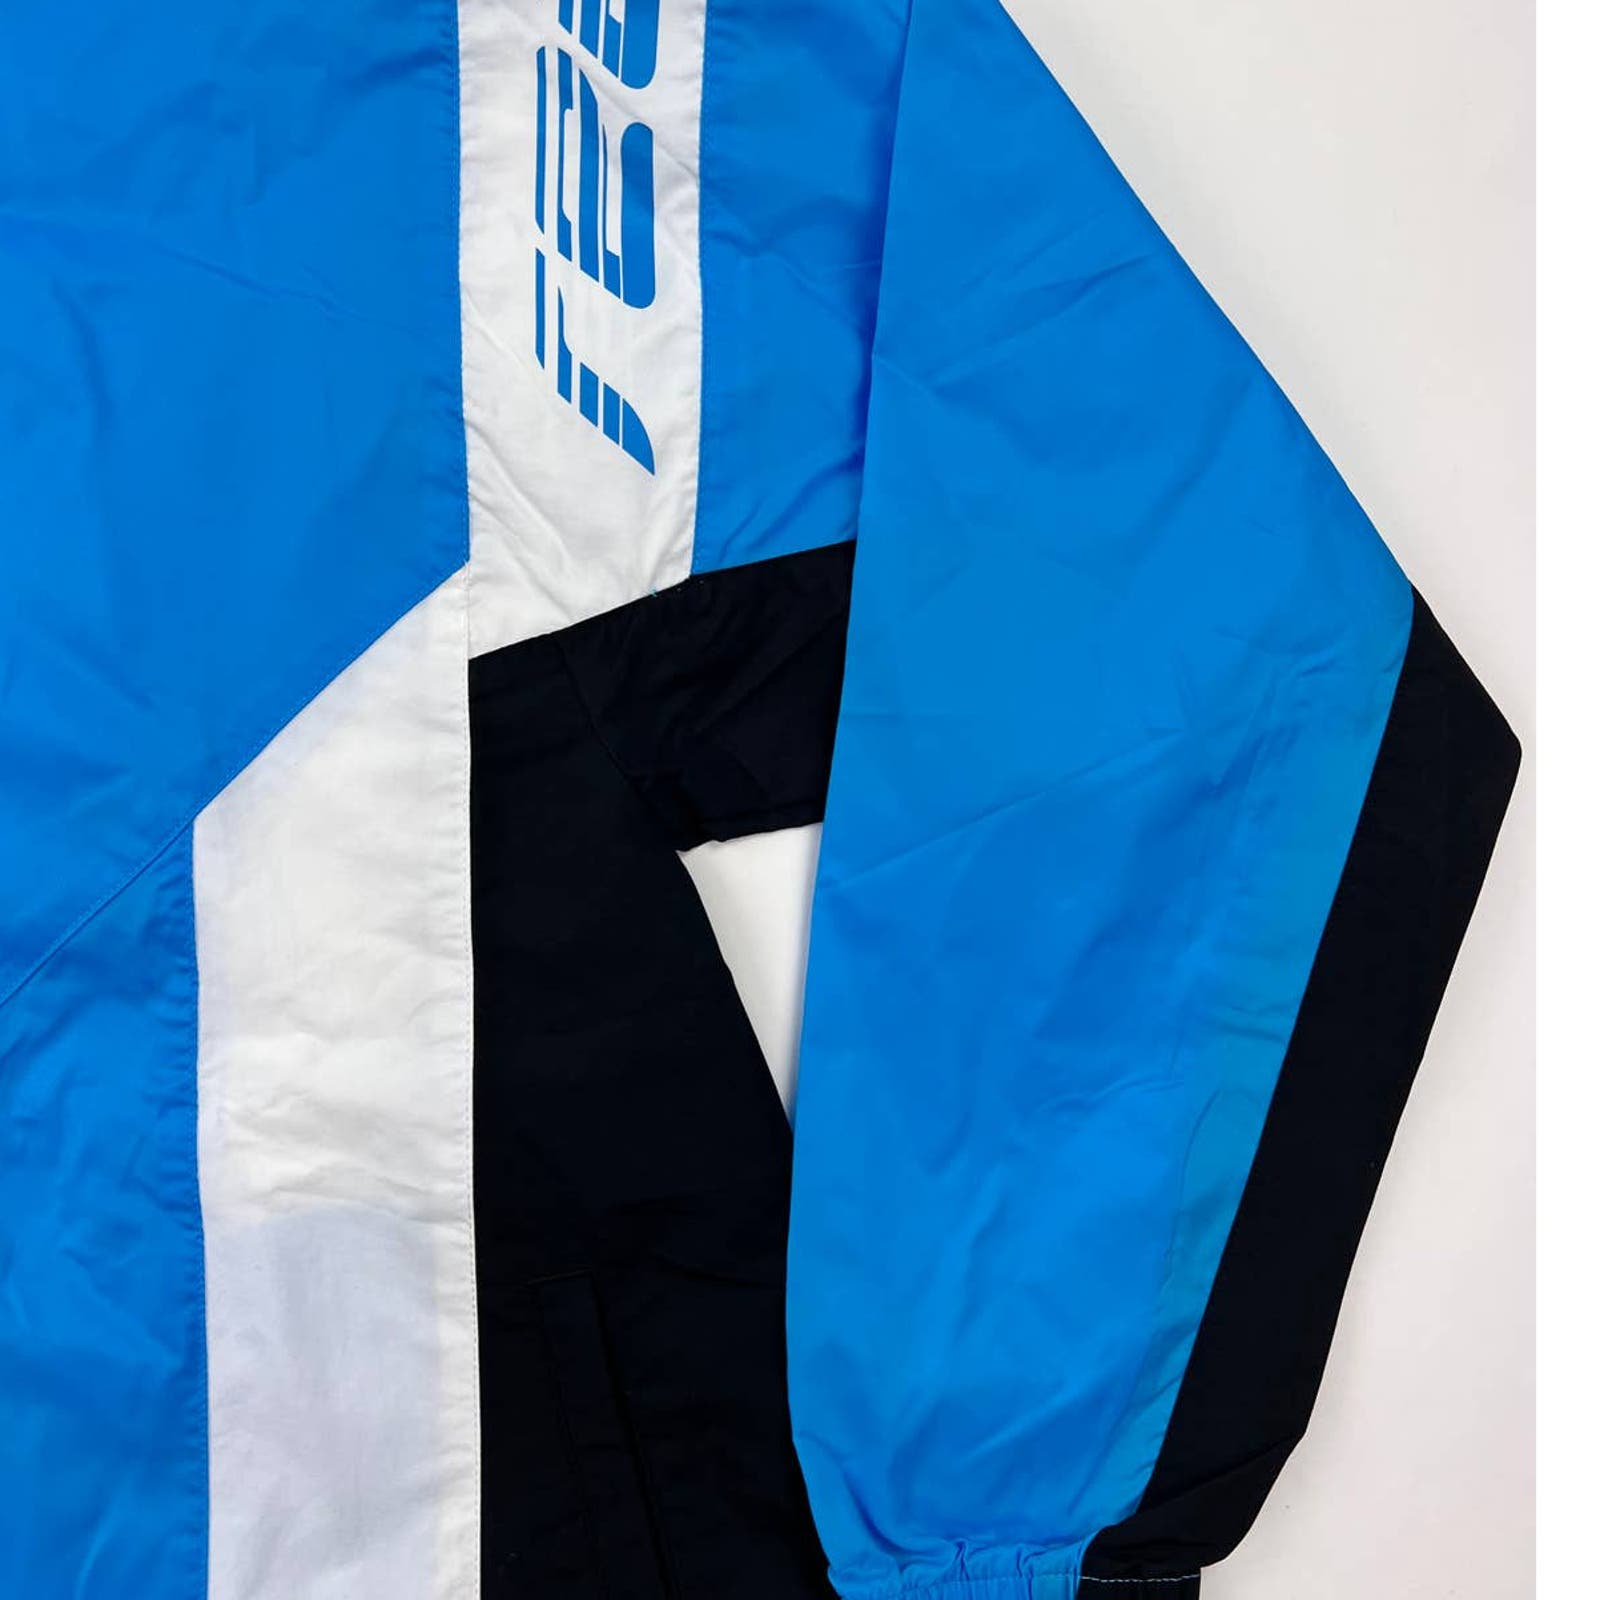 Reebok Classic Men Blue Windbreaker US S Track Jacket Zip Up